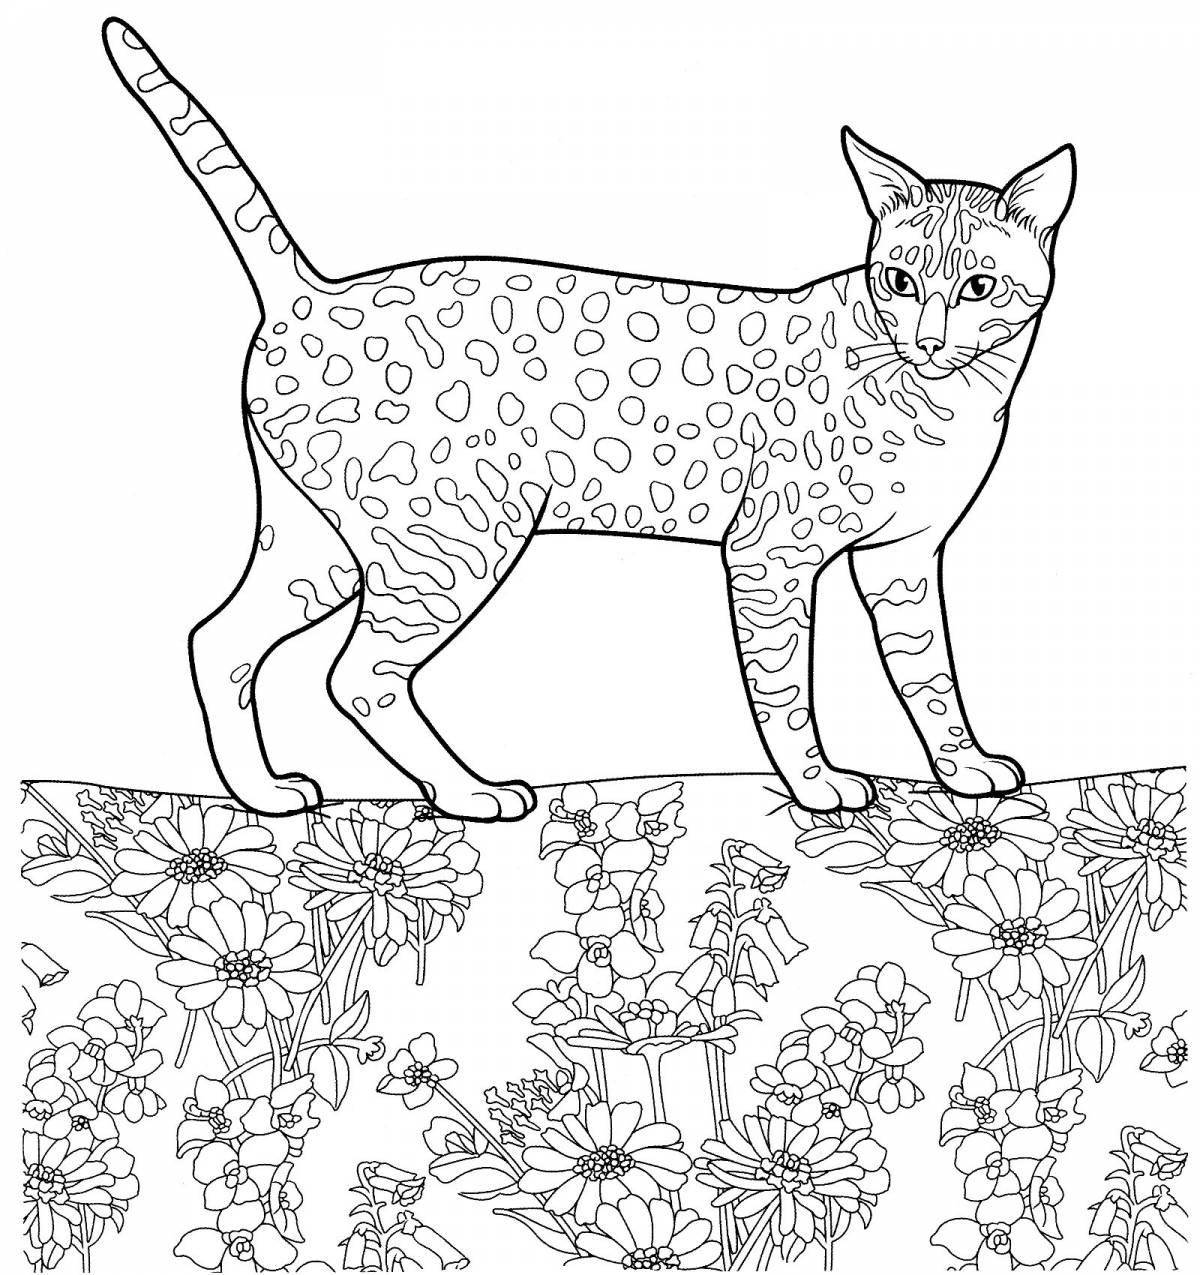 Exquisite cat breed coloring book